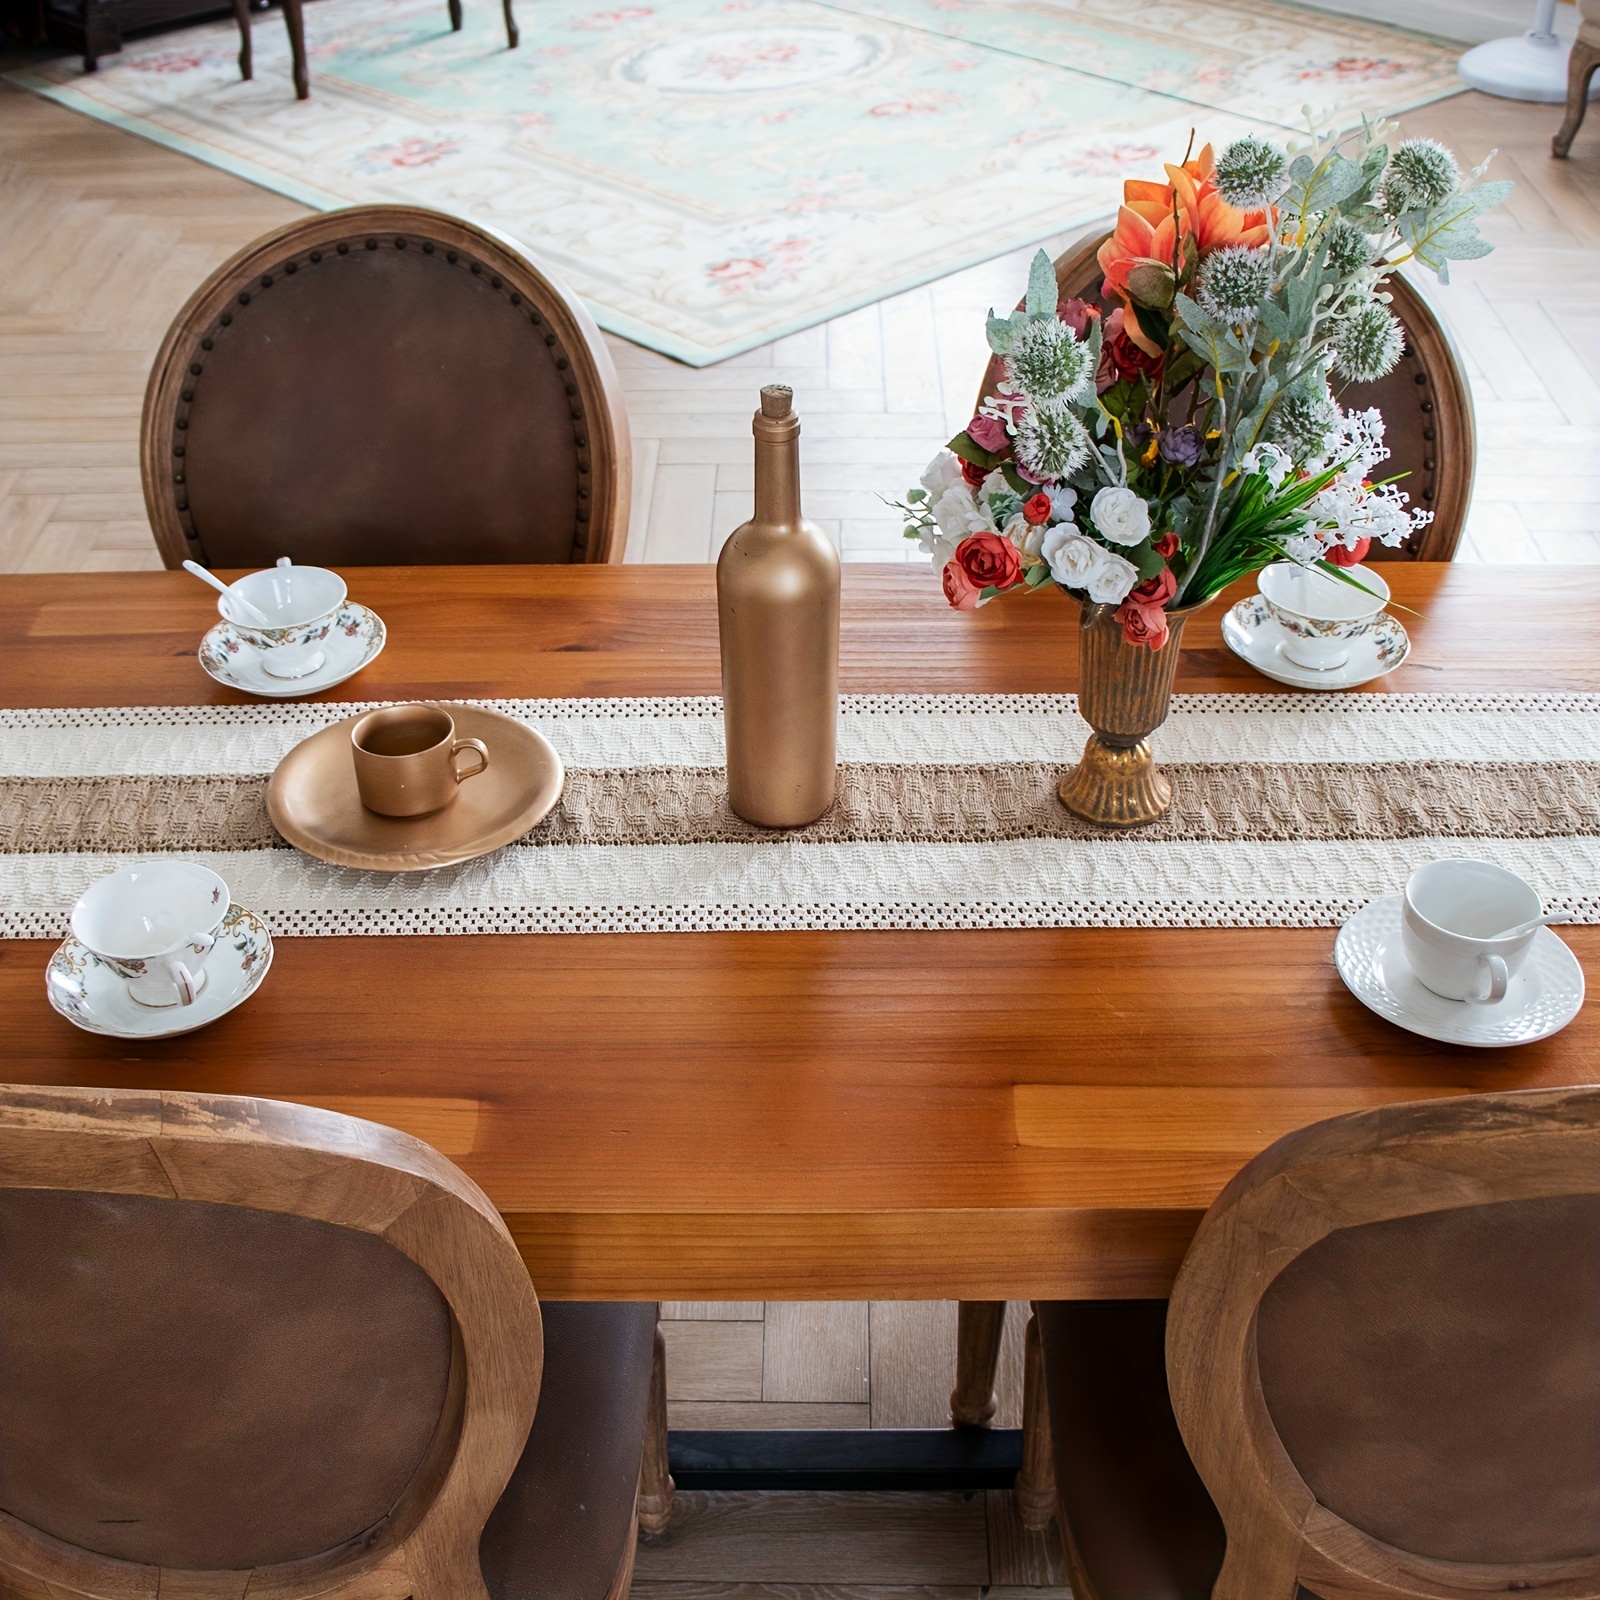 Camino de mesa de macramé estilo granja, camino de mesa bohemio de encaje de  algodón de arpillera natural, 12 x 72 pulgadas JAMW Sencillez